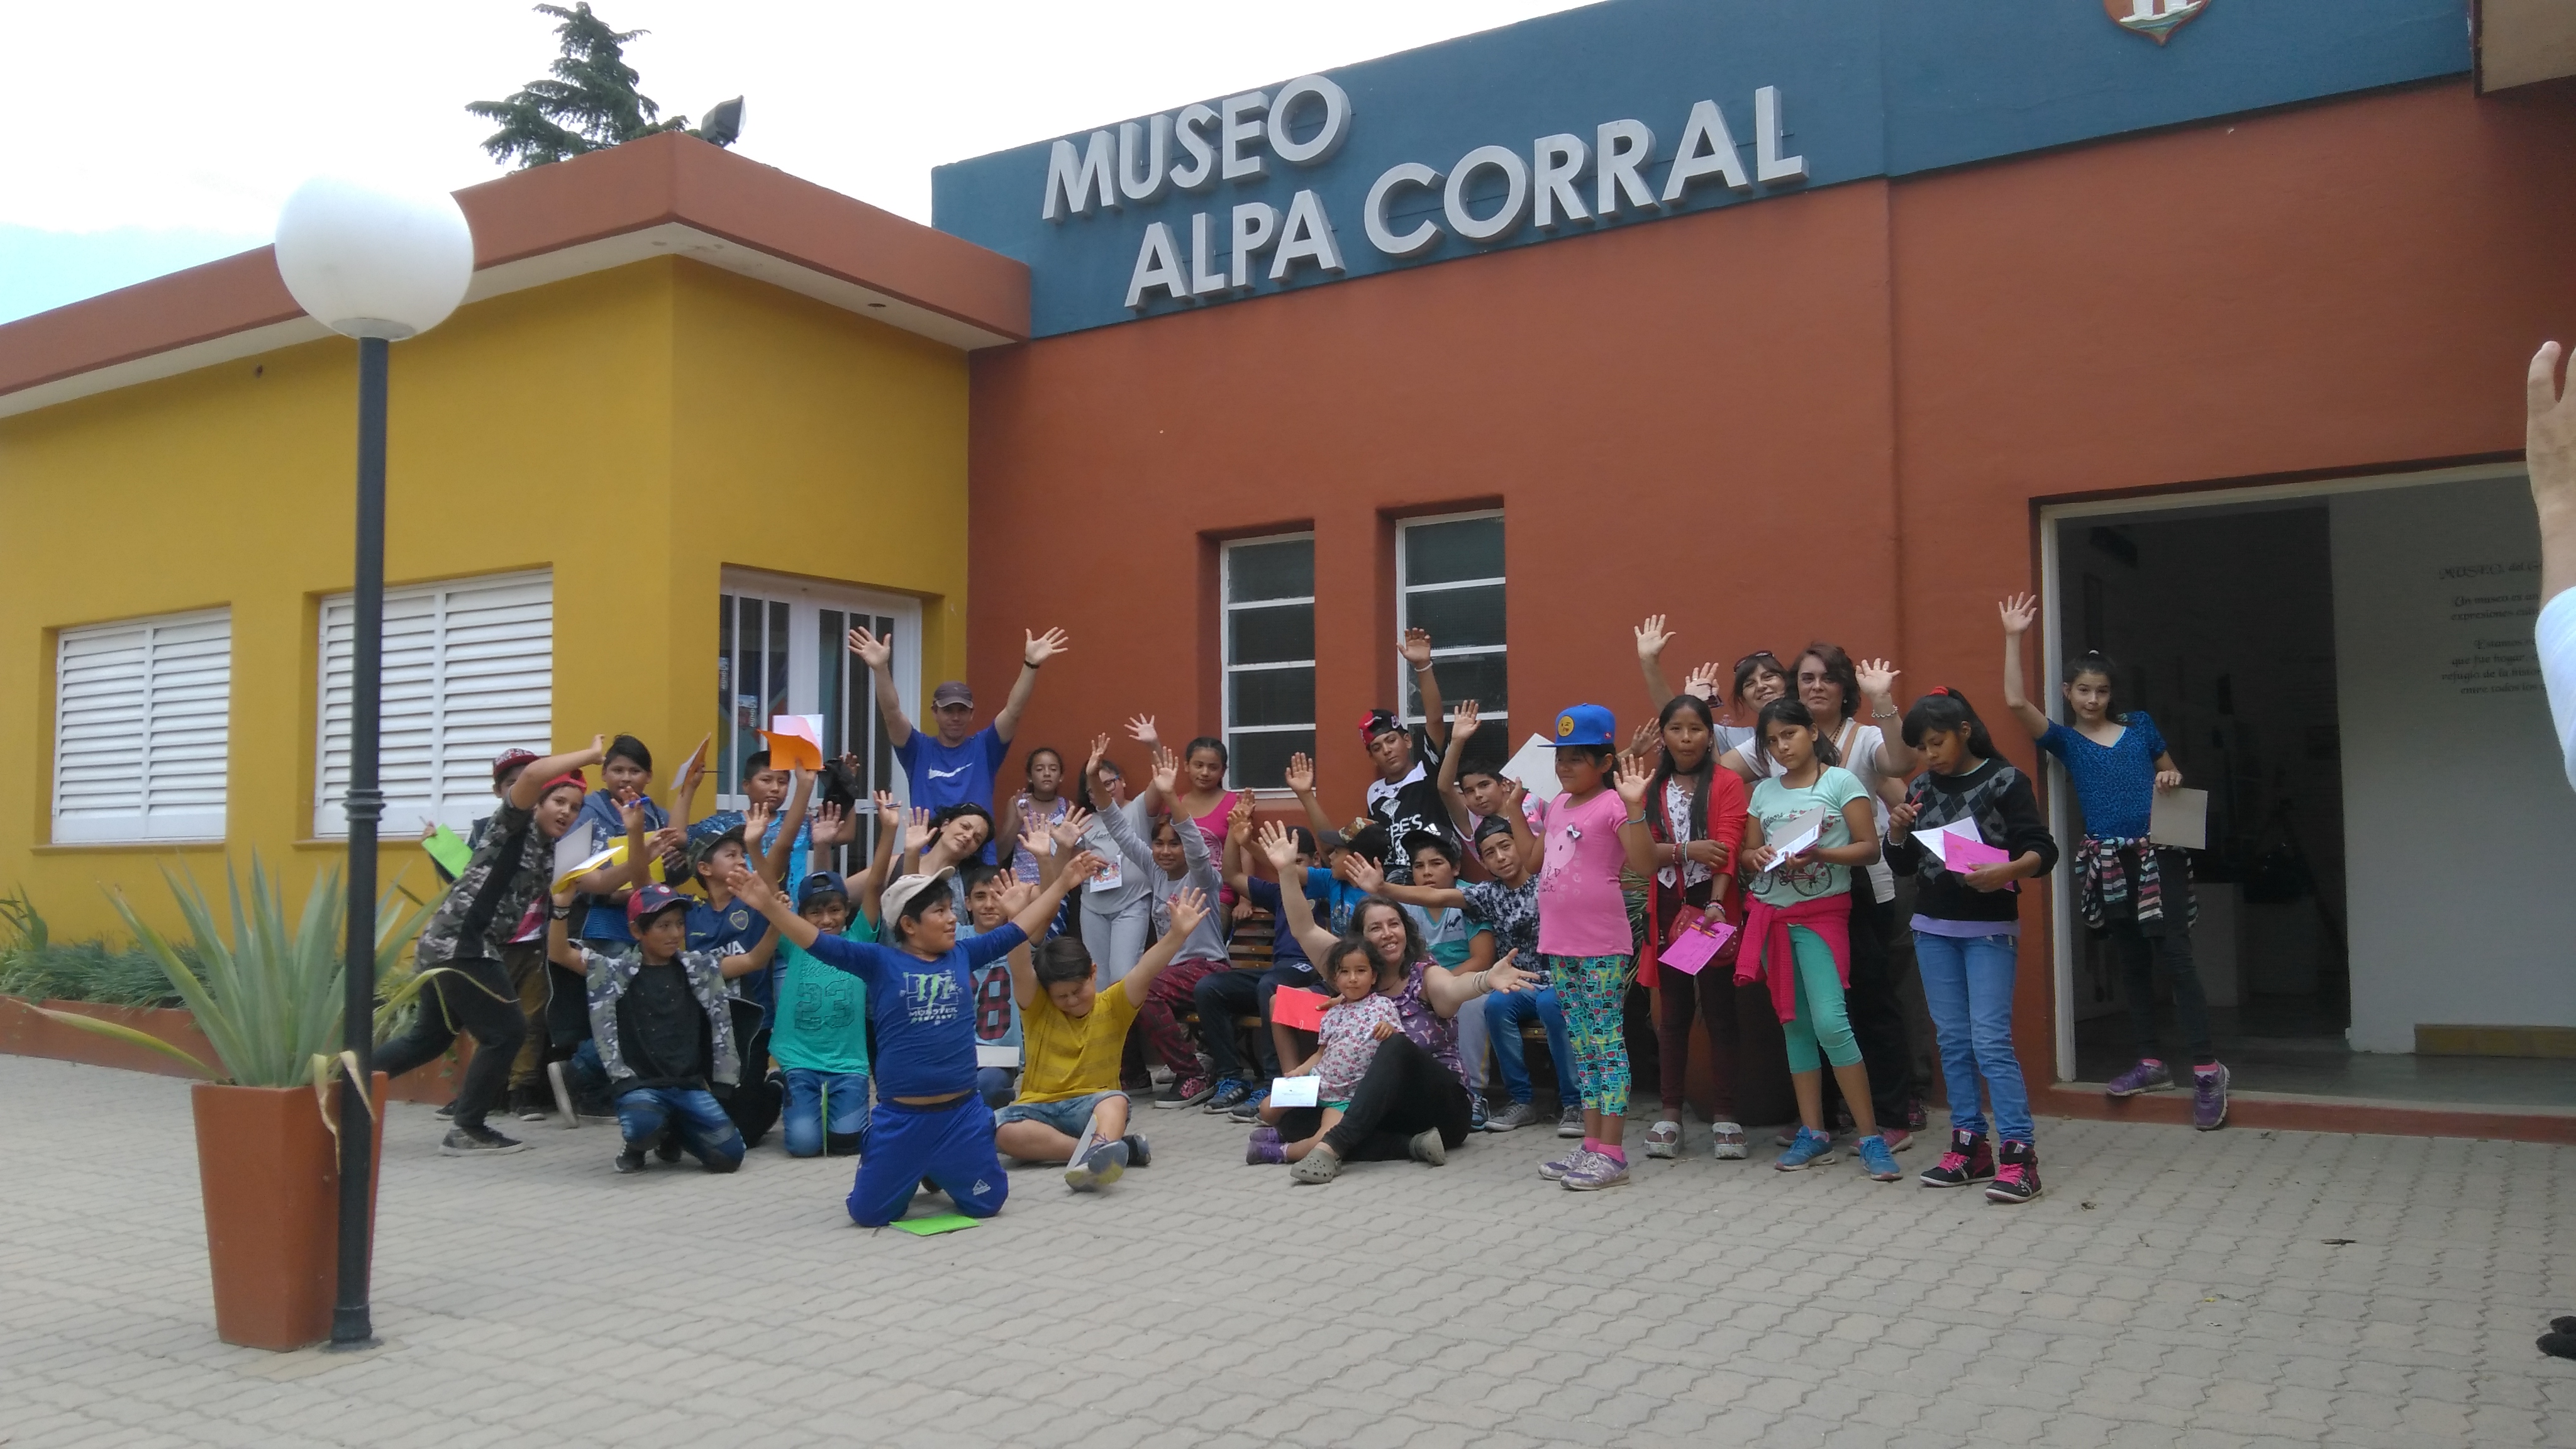 Museo de Alpa Corral